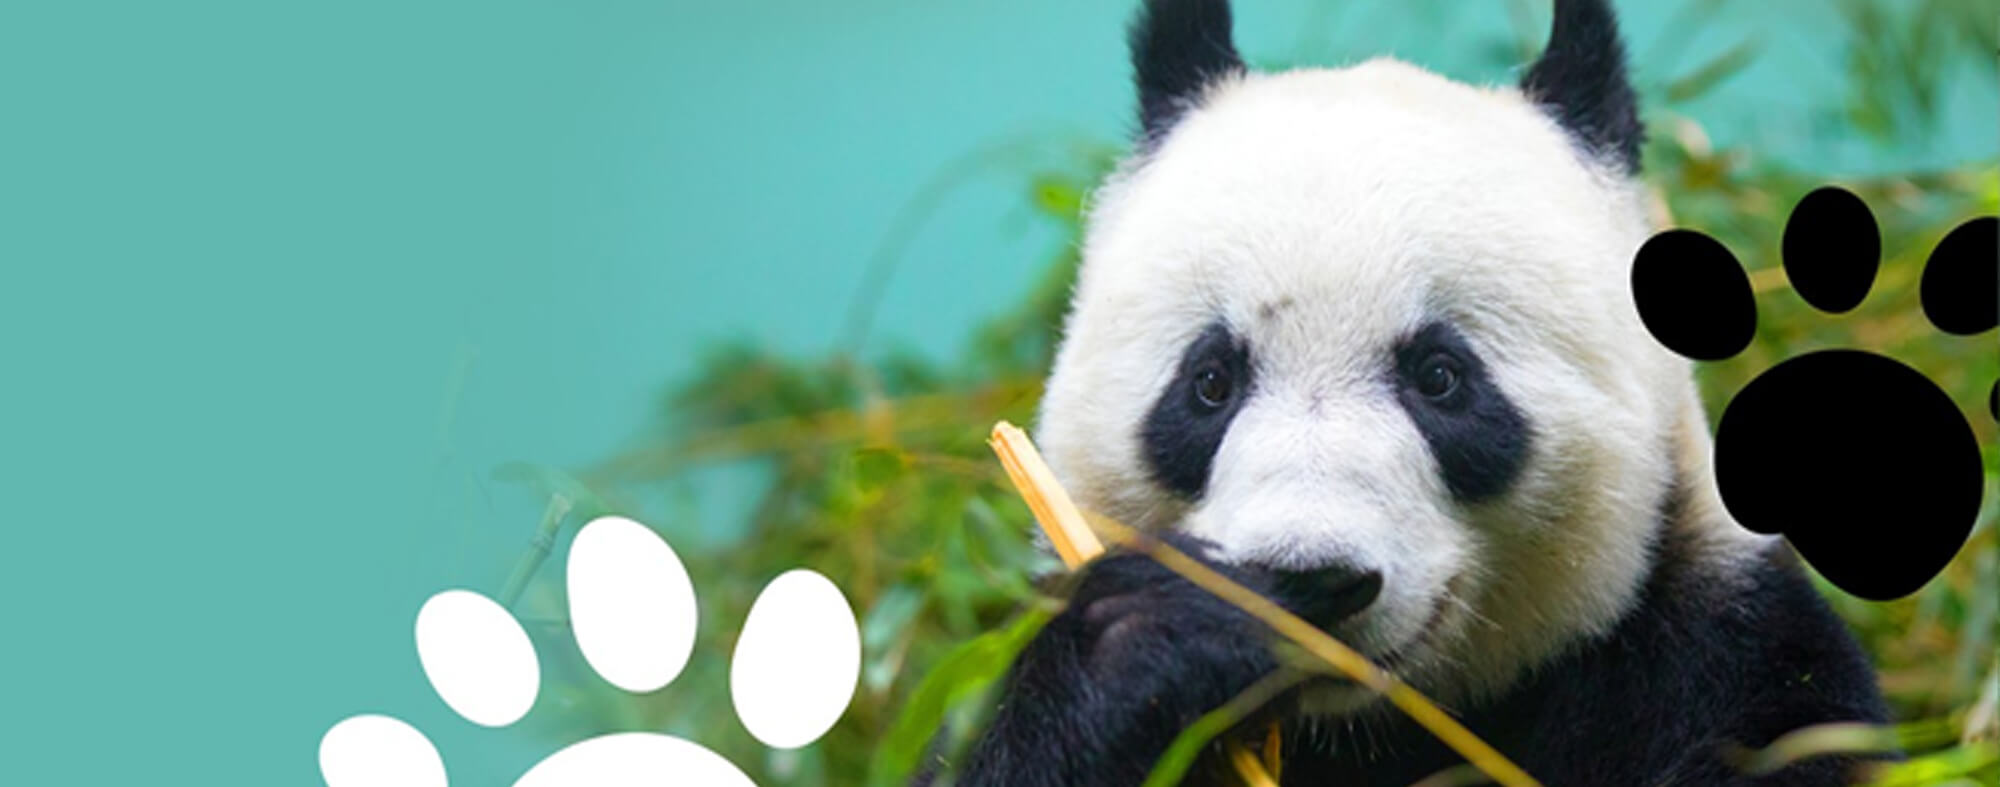 a panda eating bamboo